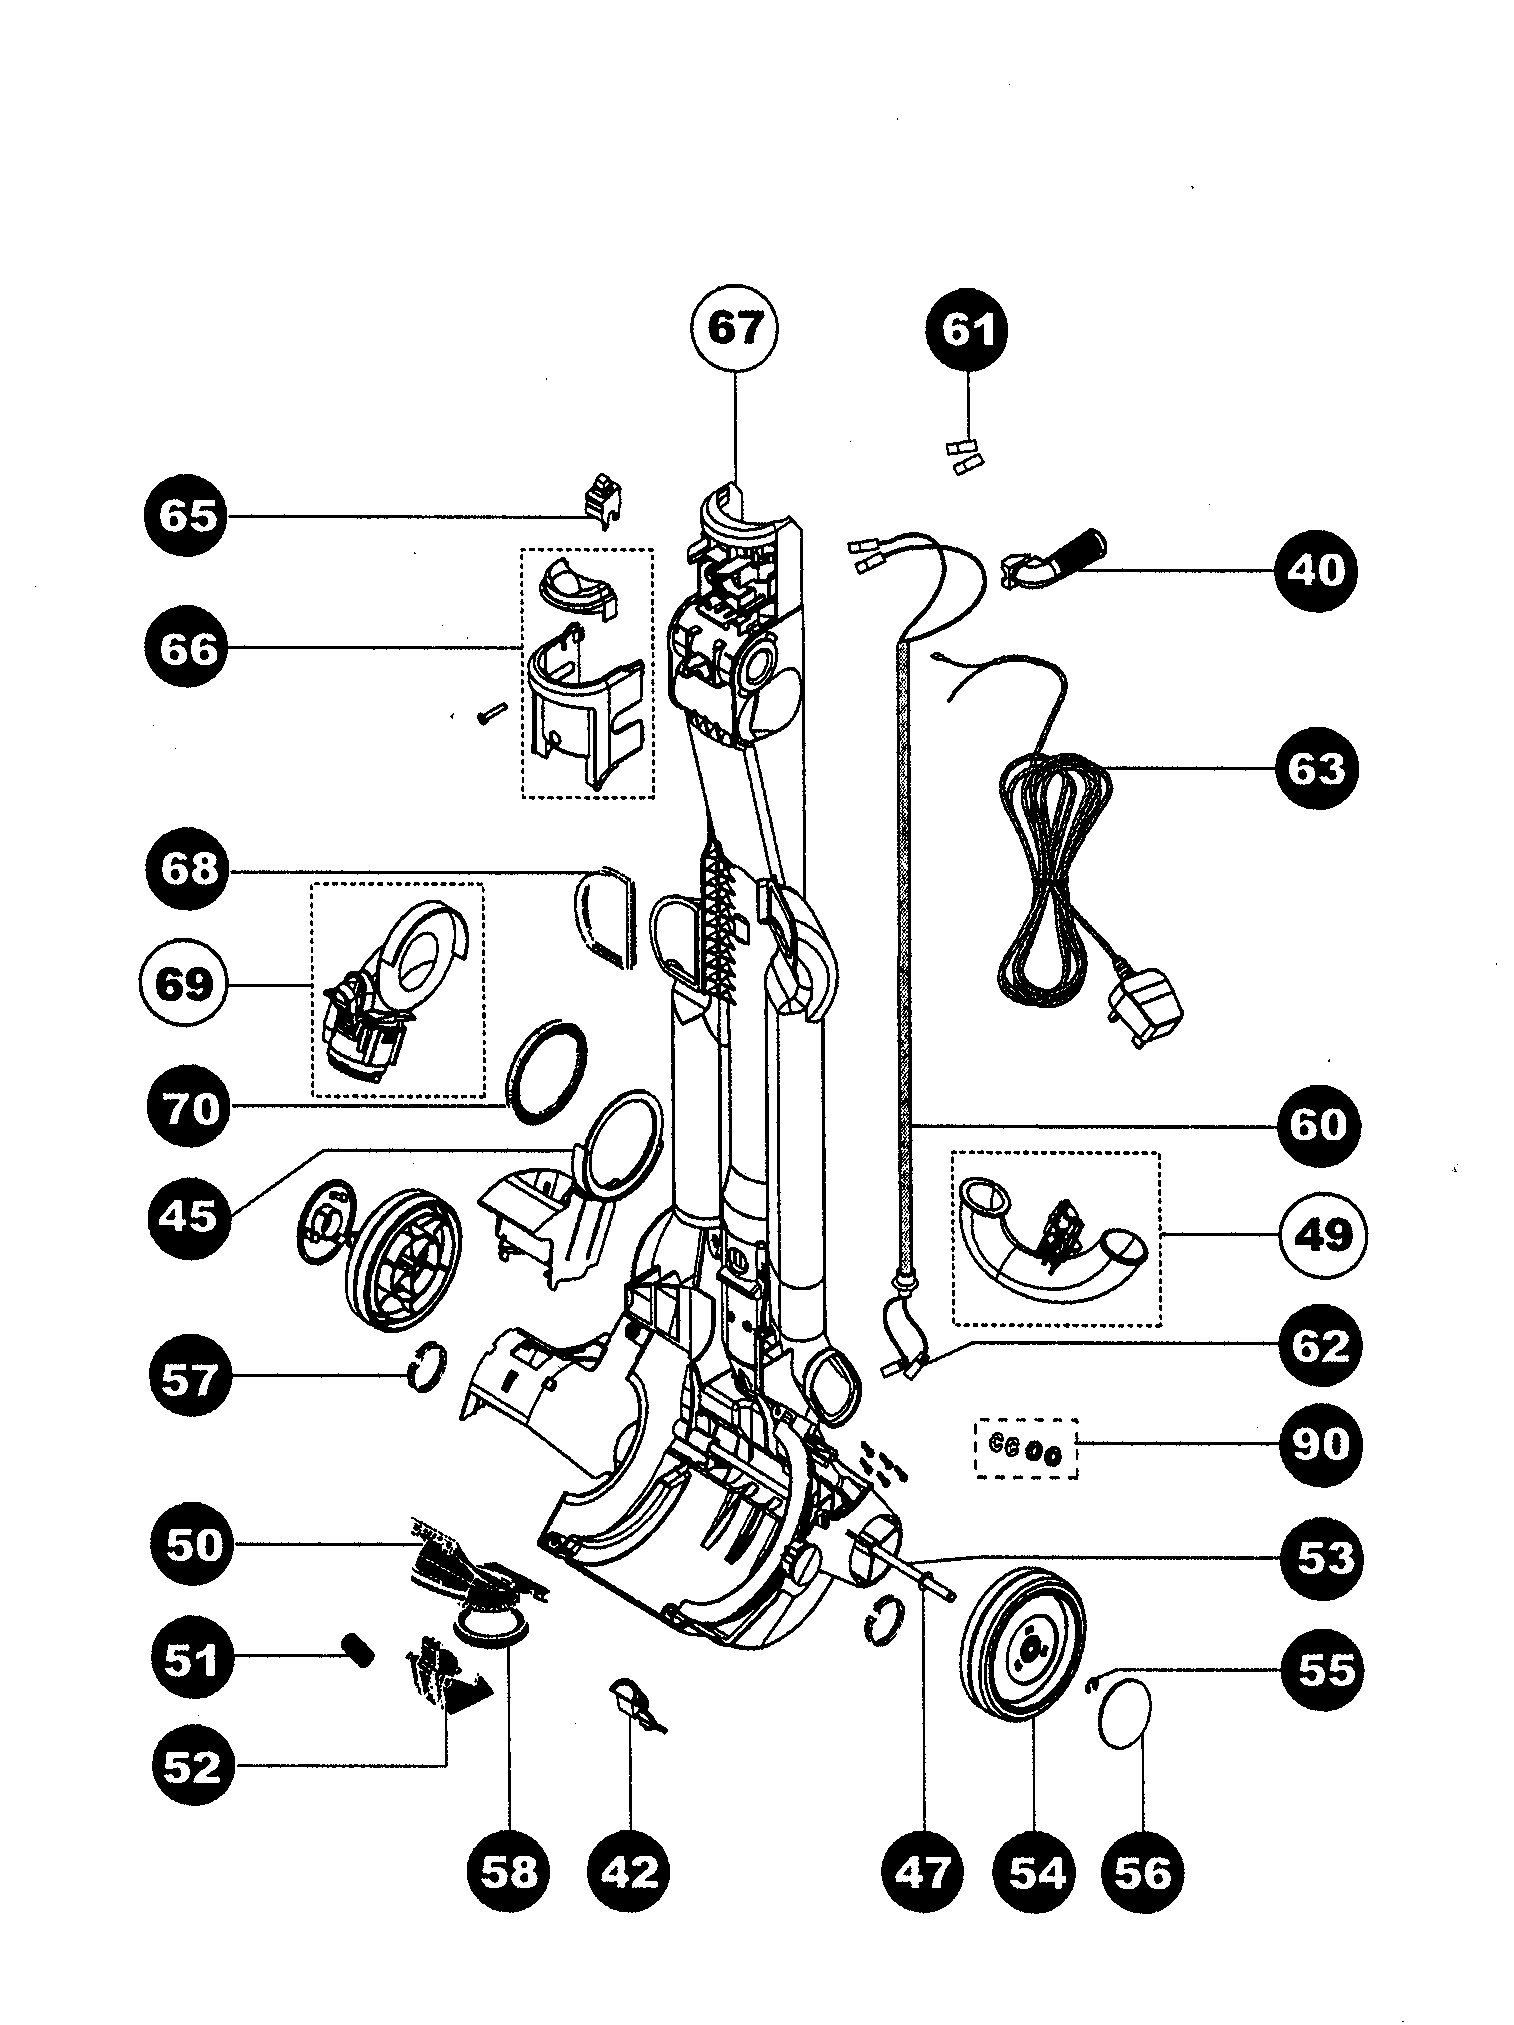 dyson dc14 animal parts diagram